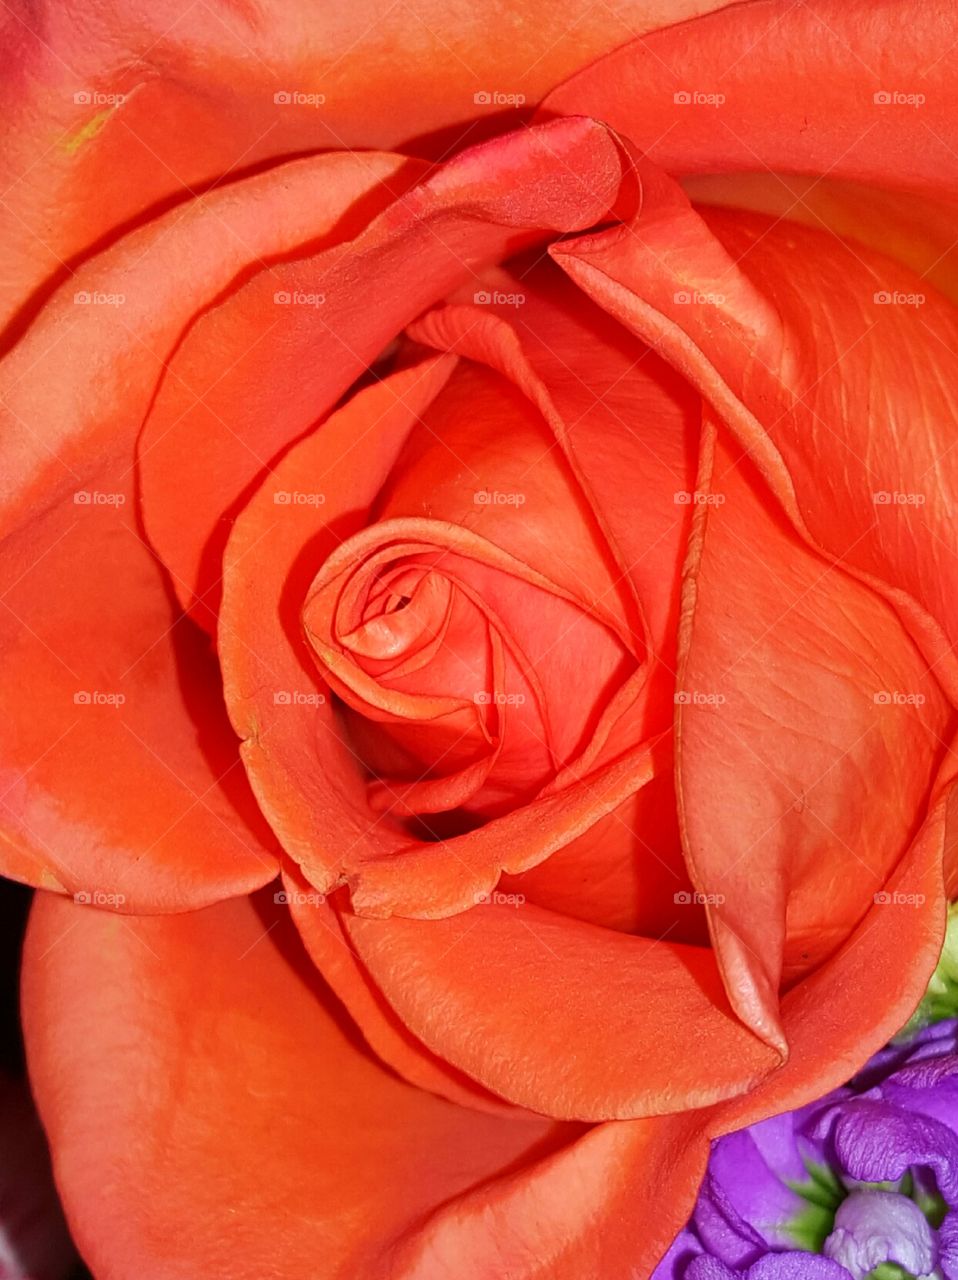 Rose, Flower, Love, Romance, Petal